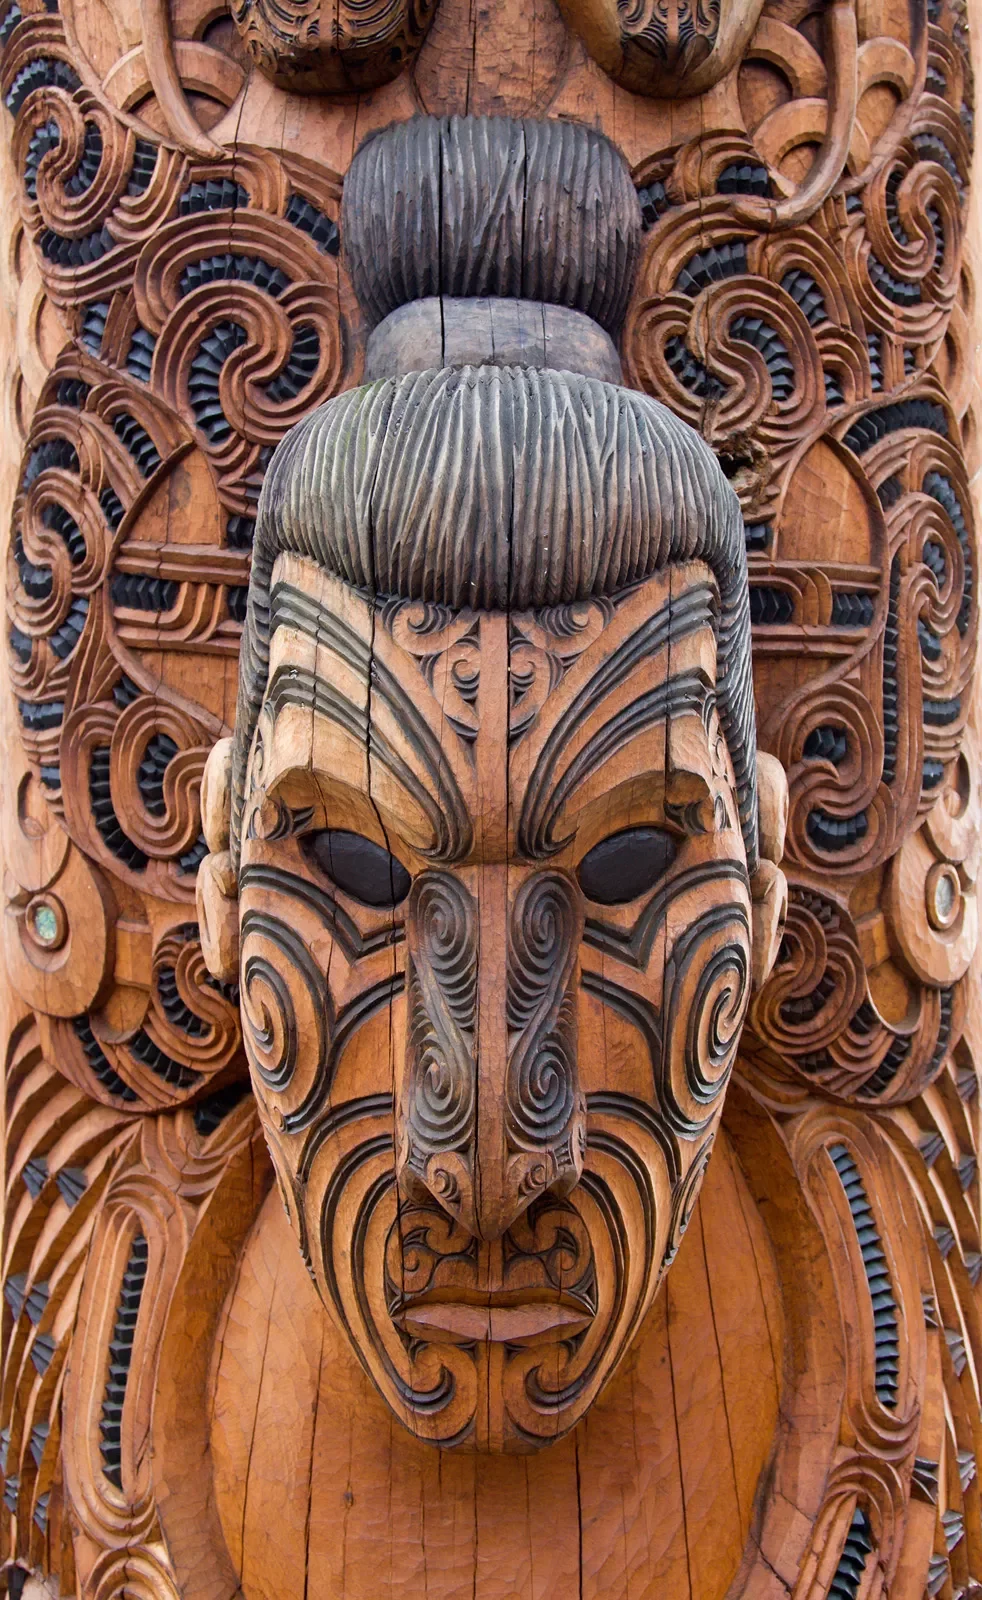 Close-up of Maori face carving.